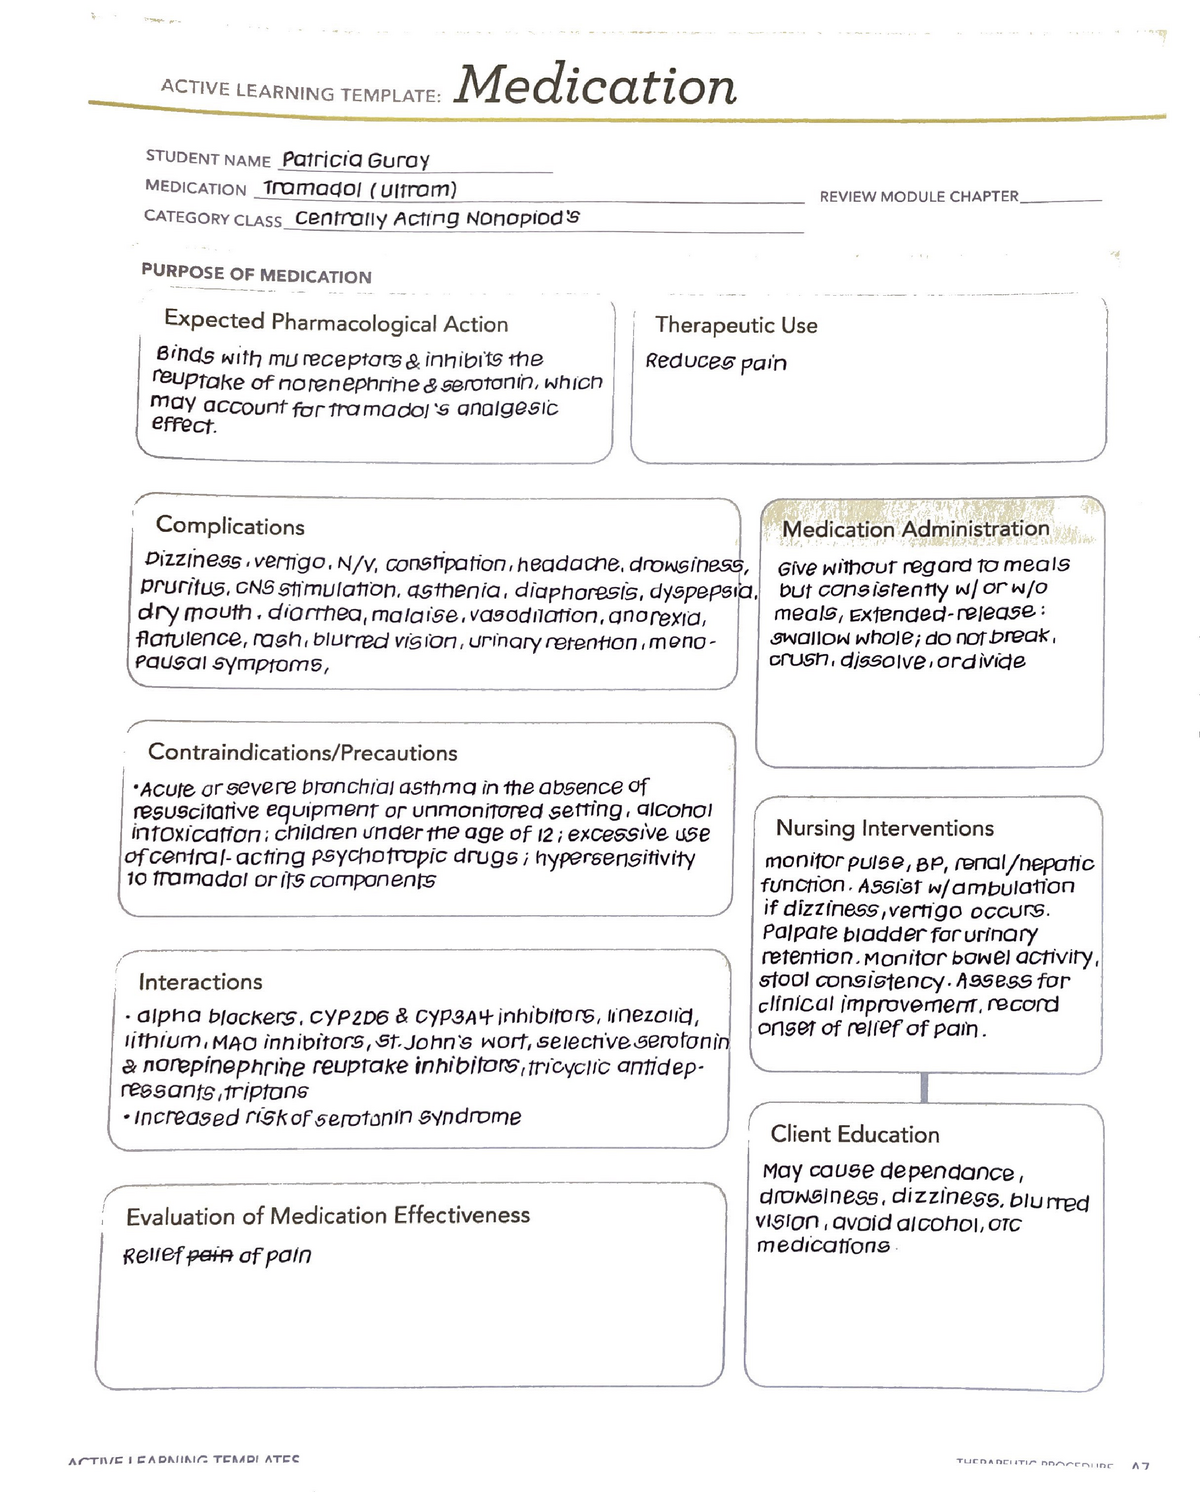 tramadol-active-learning-template-medication-dr-buchanan-nurs-100